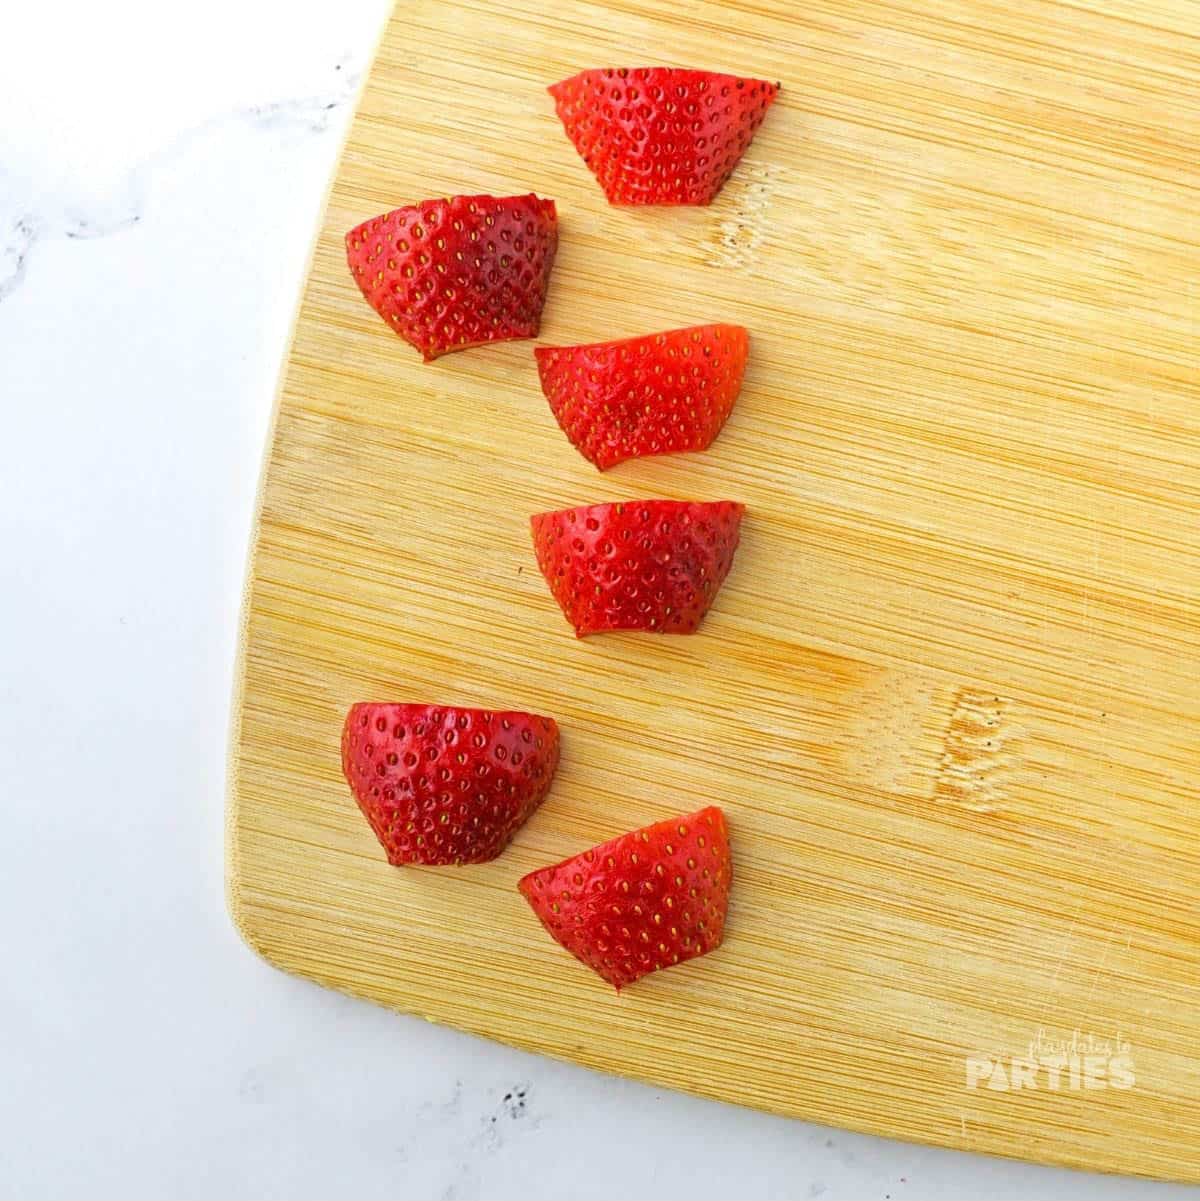 Strawberries cut up on a cutting board.